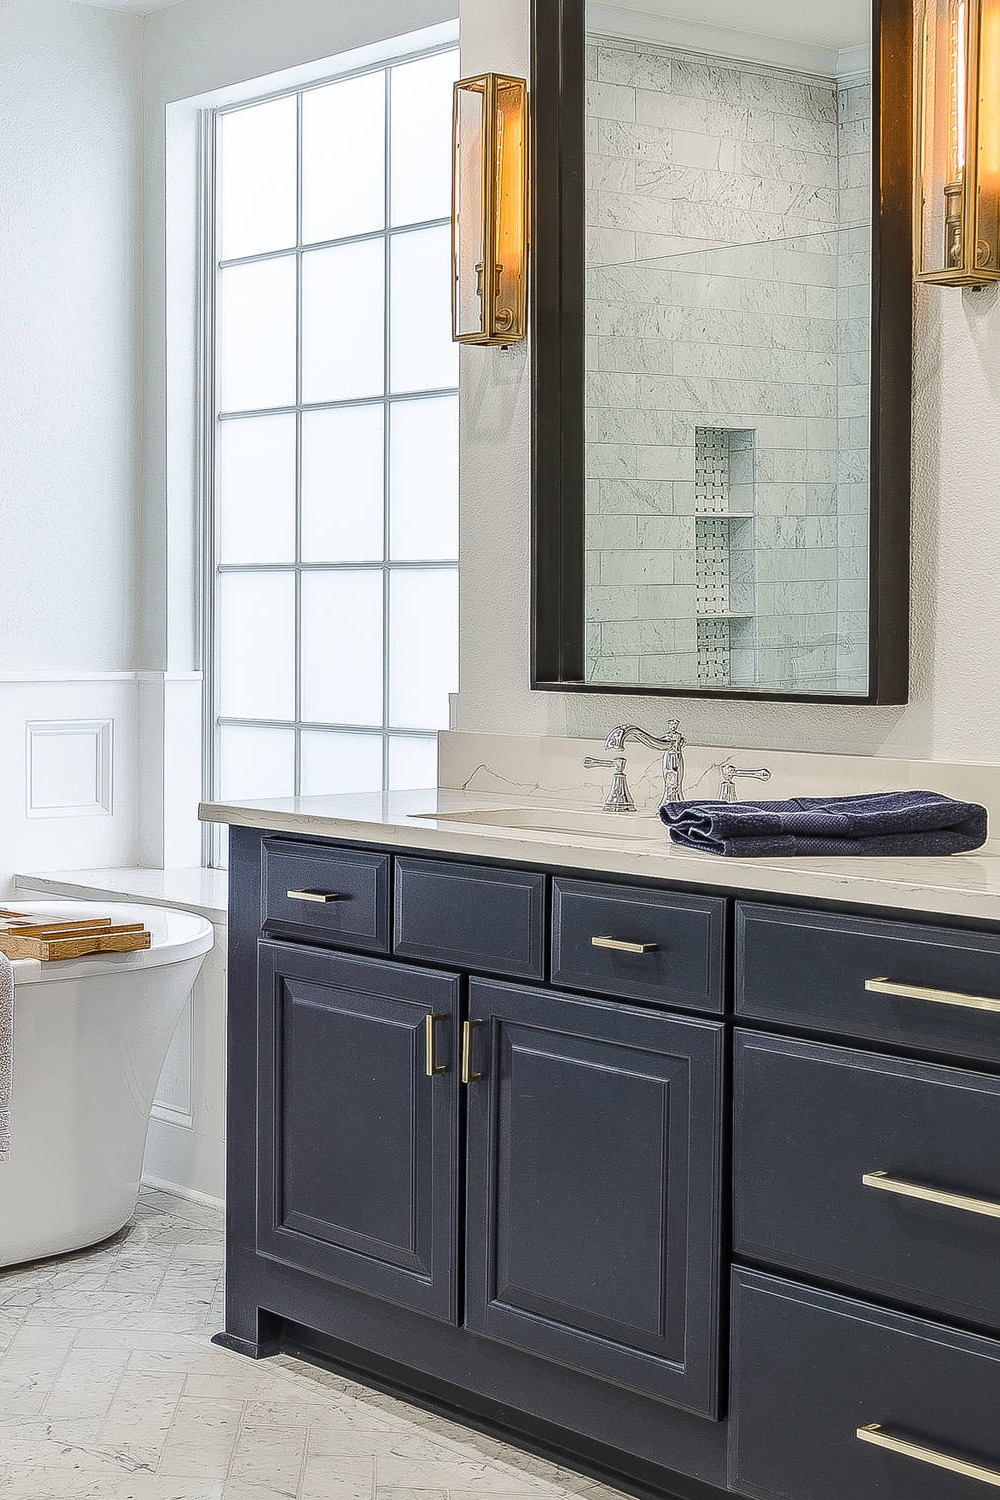 Blue Vanity Cabinets White Quartz Countertos Backsplash Marble Floor Tiles